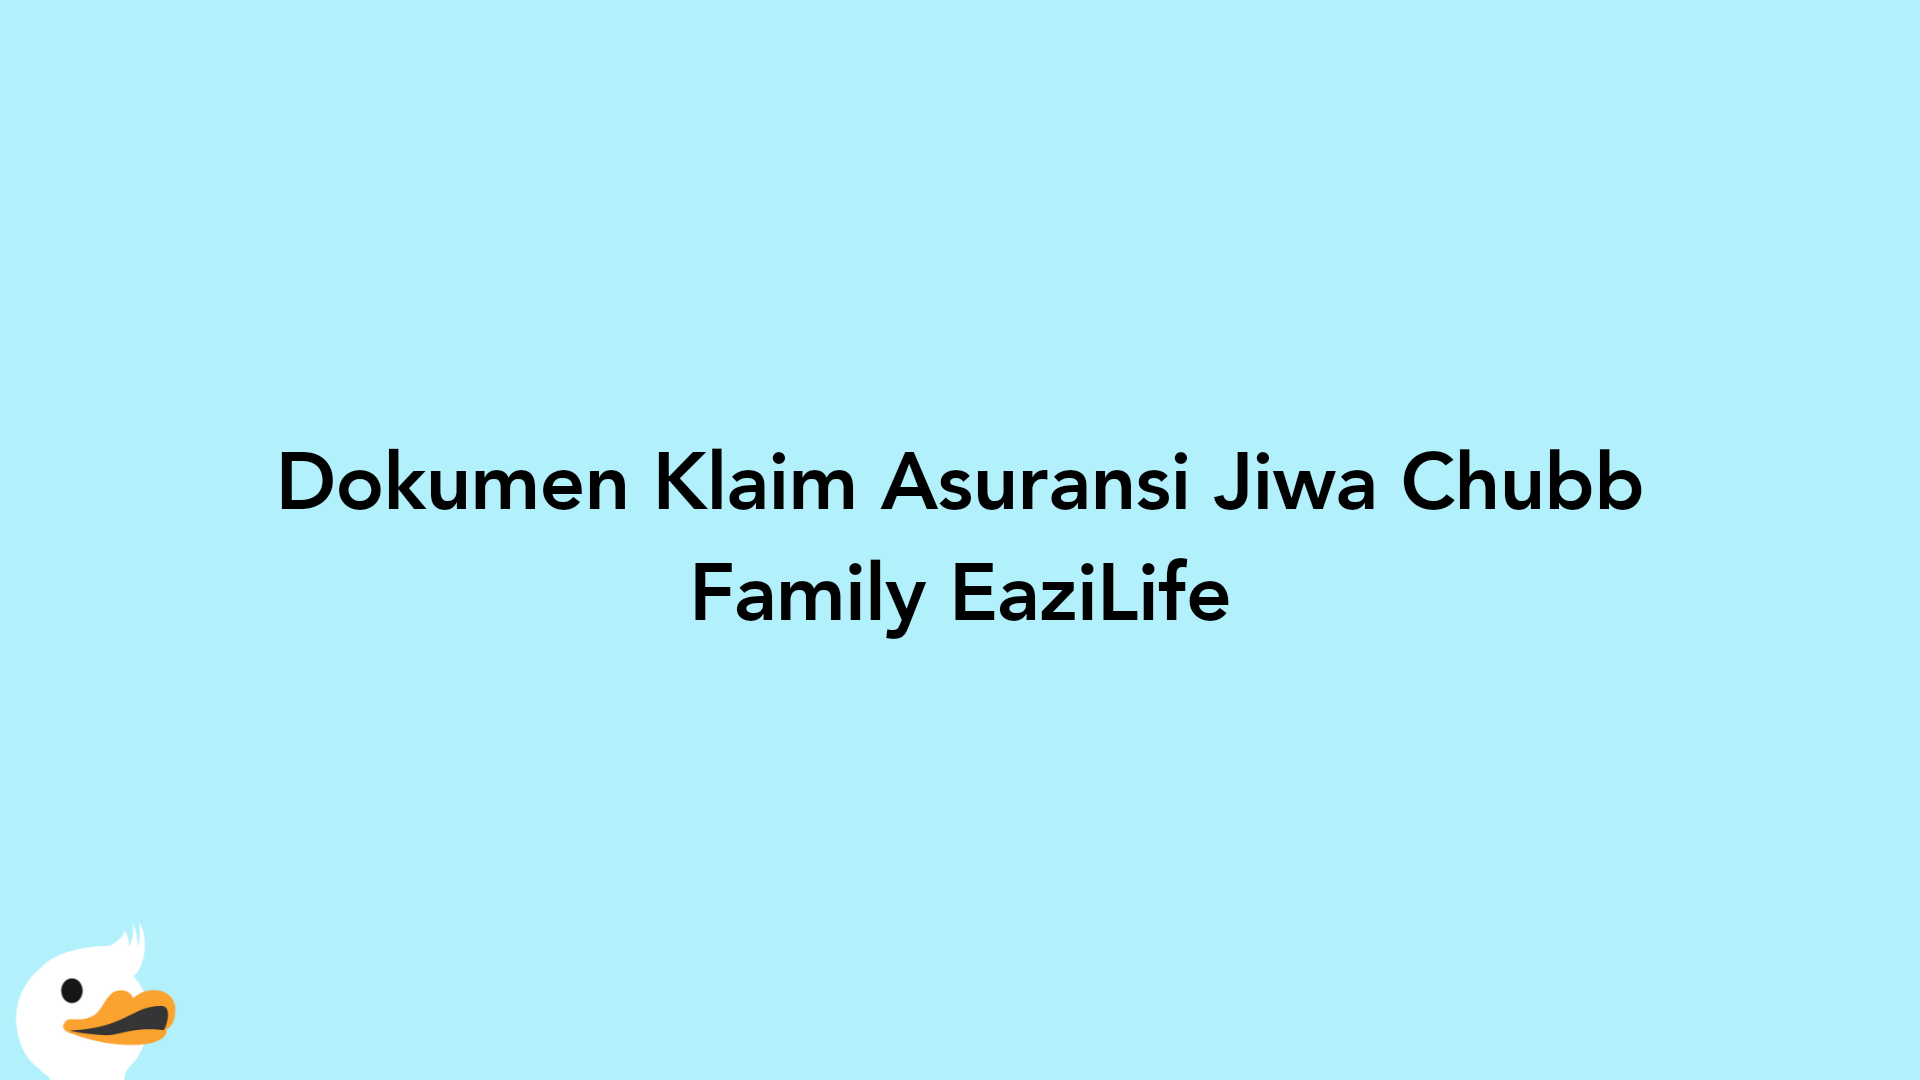 Dokumen Klaim Asuransi Jiwa Chubb Family EaziLife